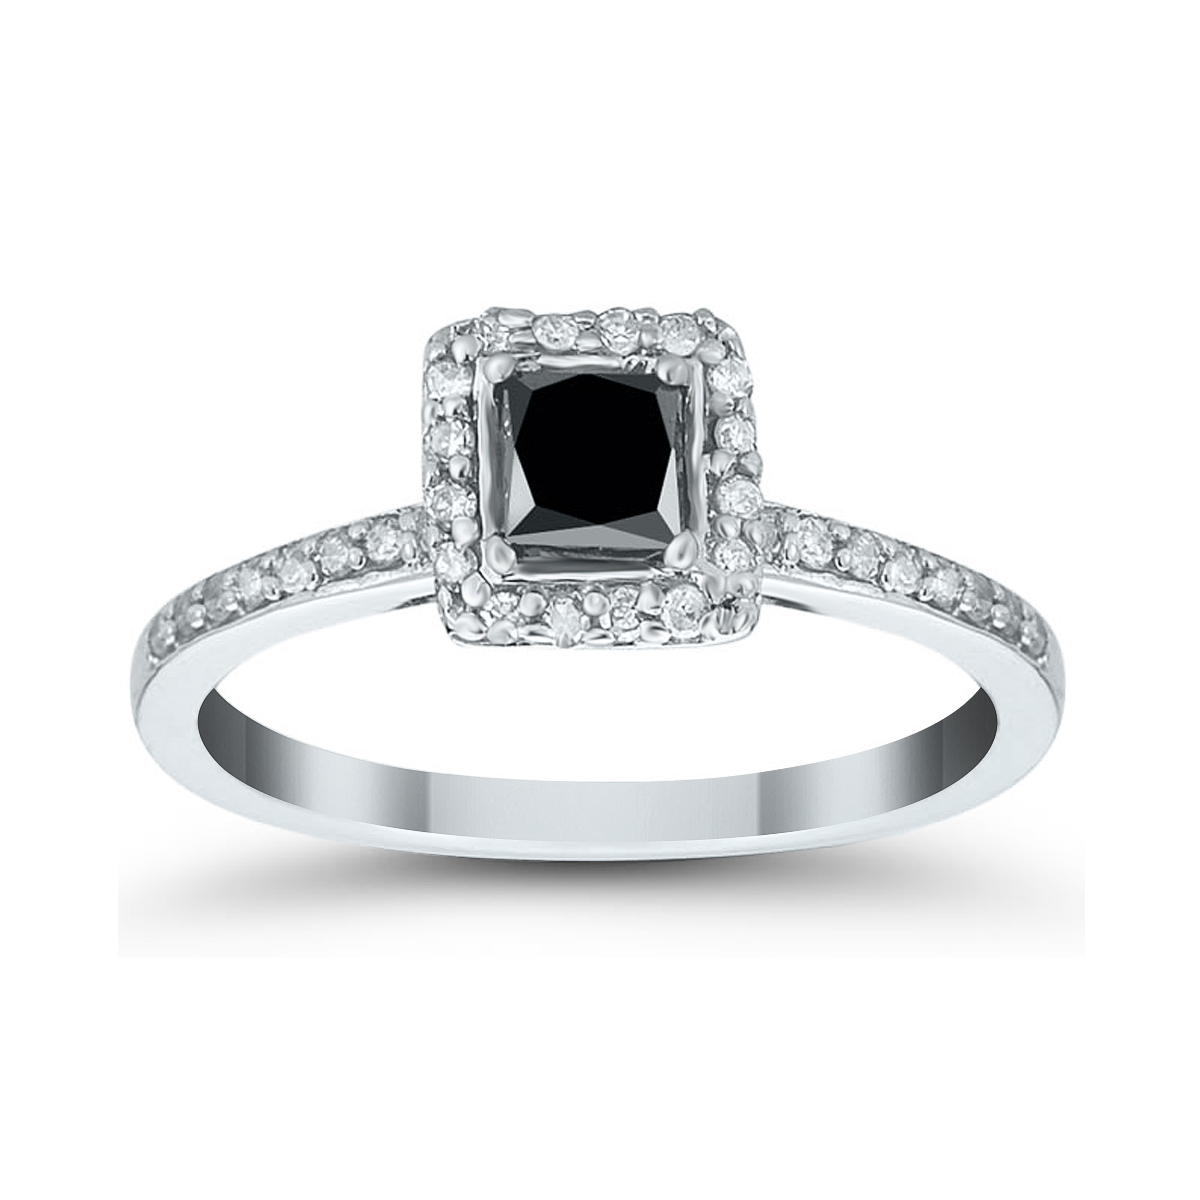 Black and White Diamond Ring in 10K White Gold